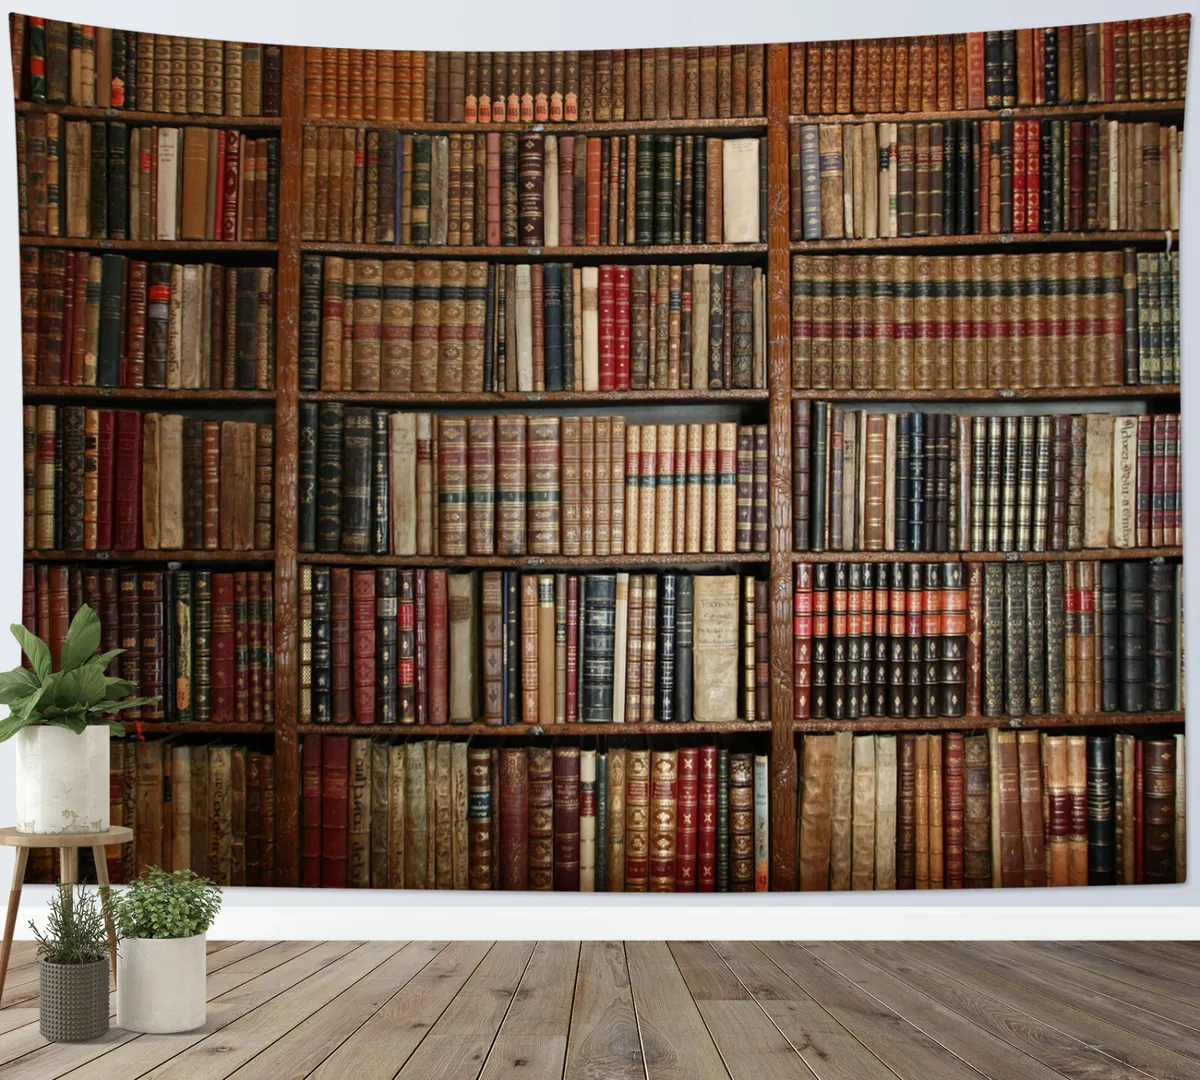 how to secure bookshelf to wall